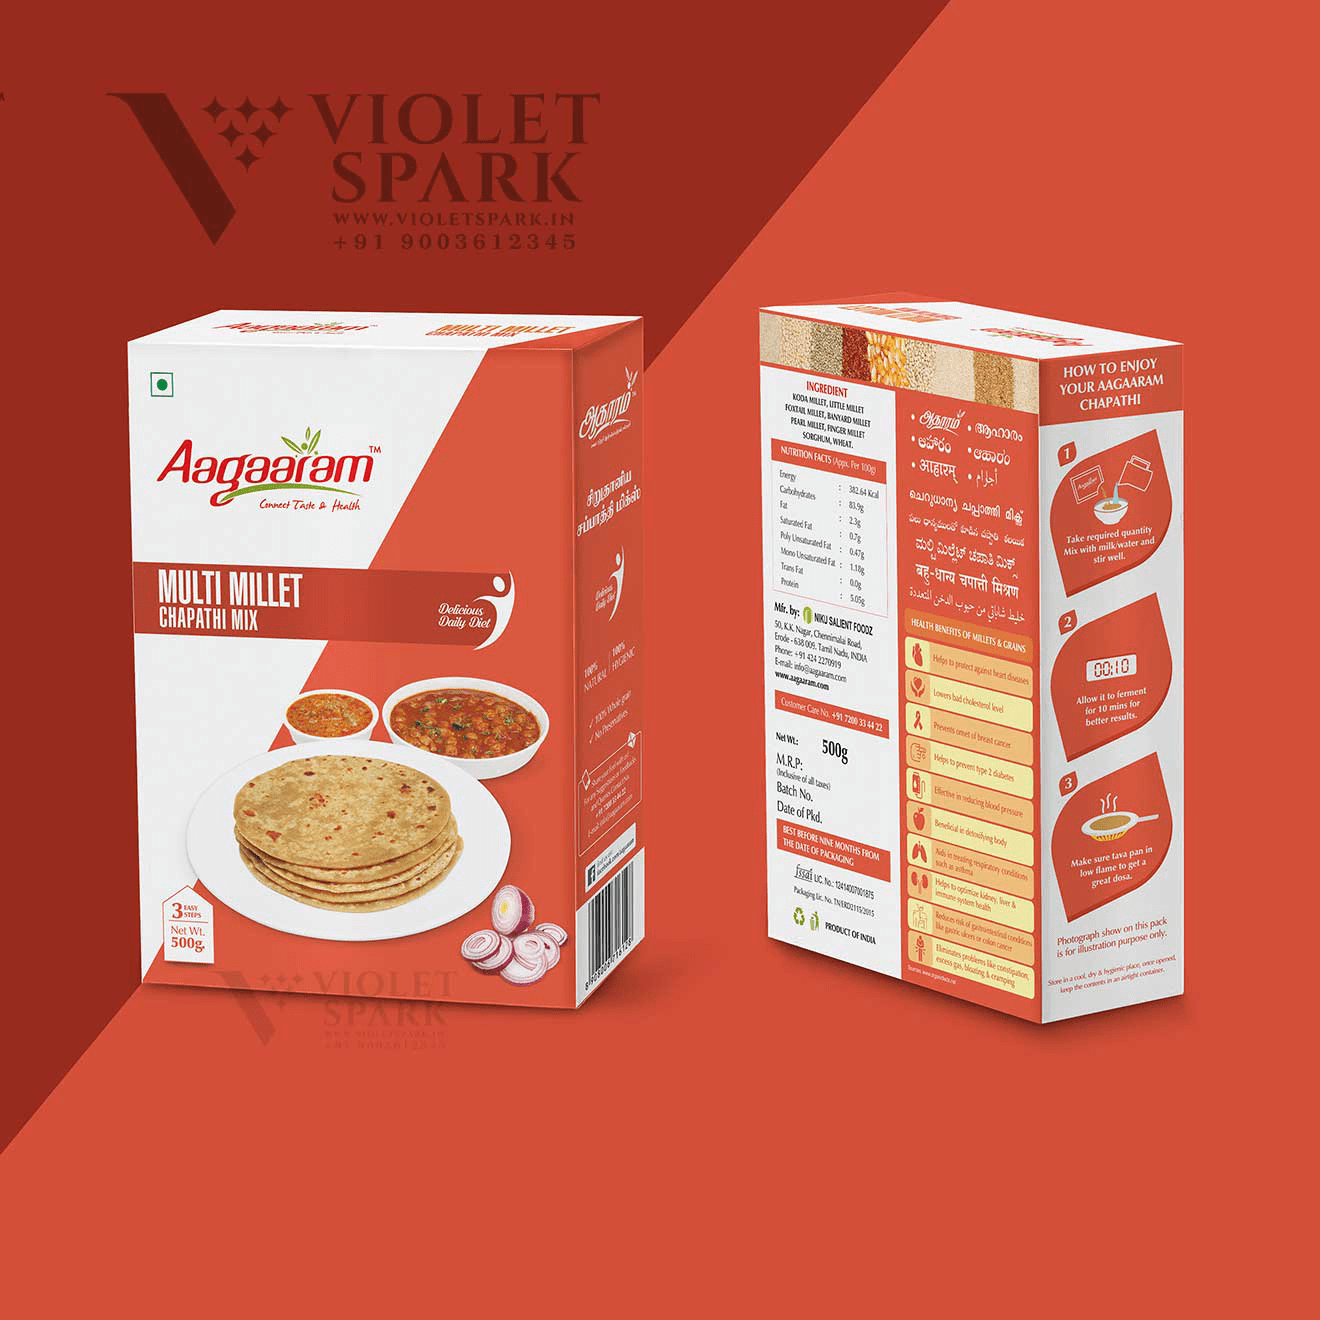 Aagaaram Multi Millet Chapathi Mix Box Branding Packaging Design Digital Marketing in Erode by Violet Spark